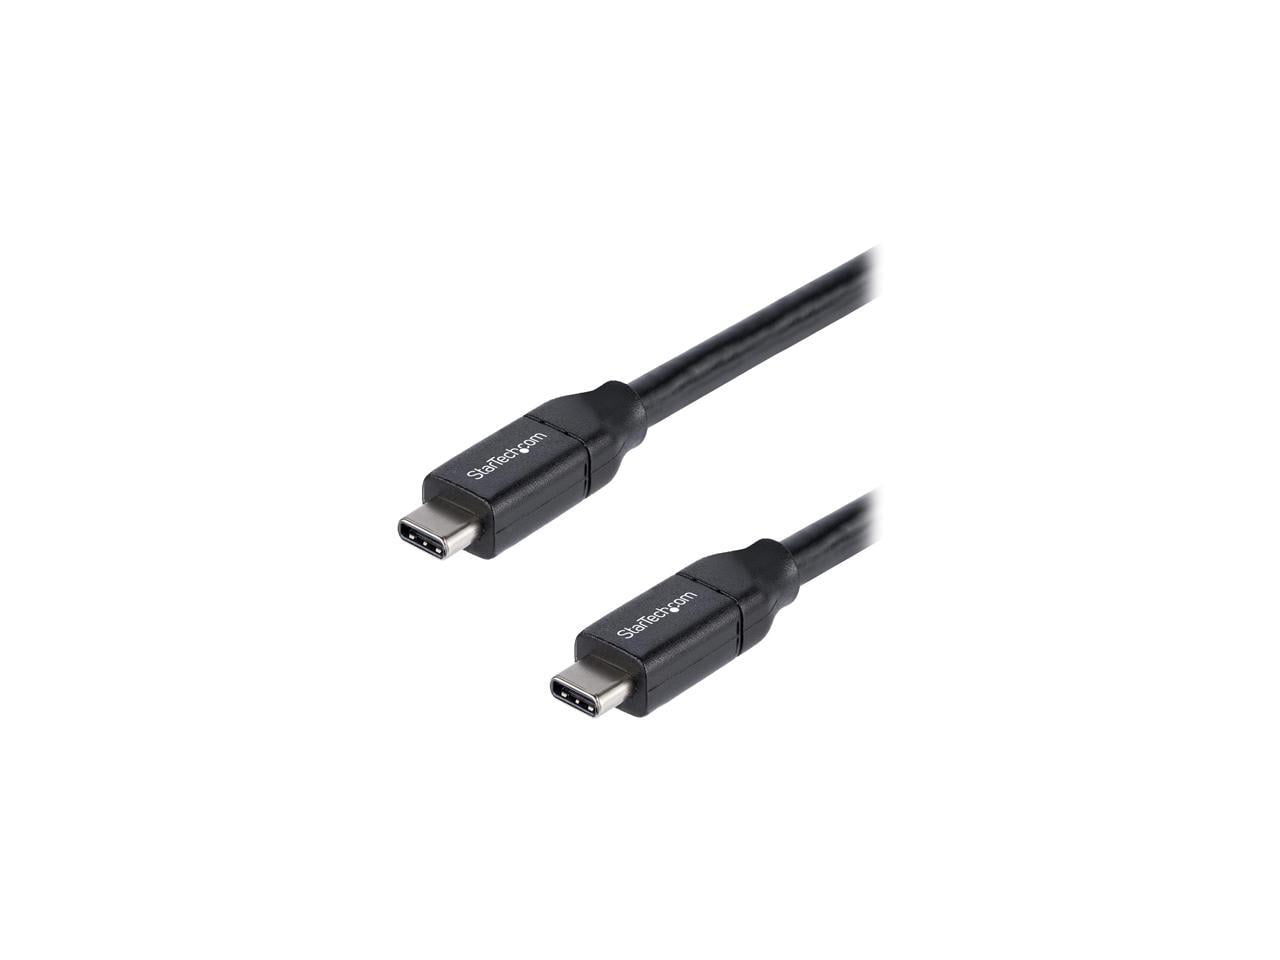 Câble USB A 2.0 vers USB-C Sologic - 1.5 m –